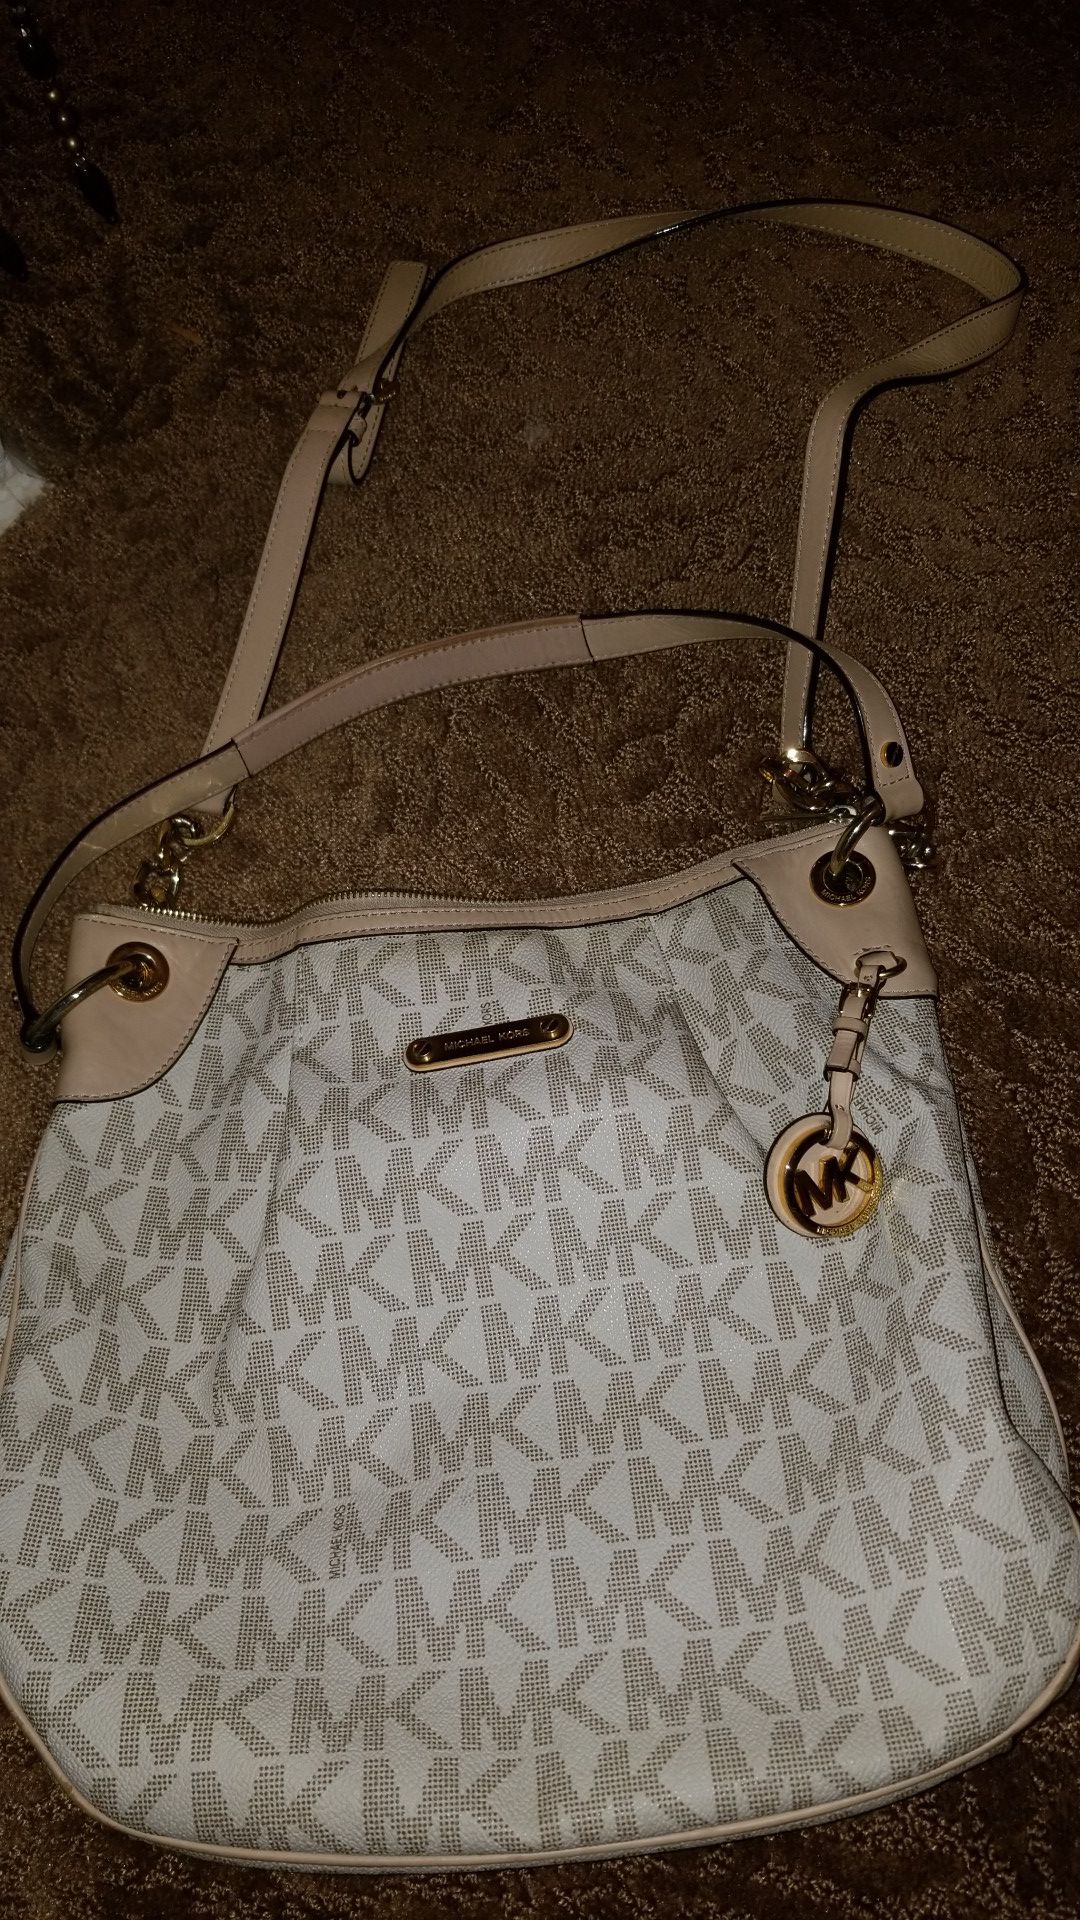 Michael Kors bag and wallet